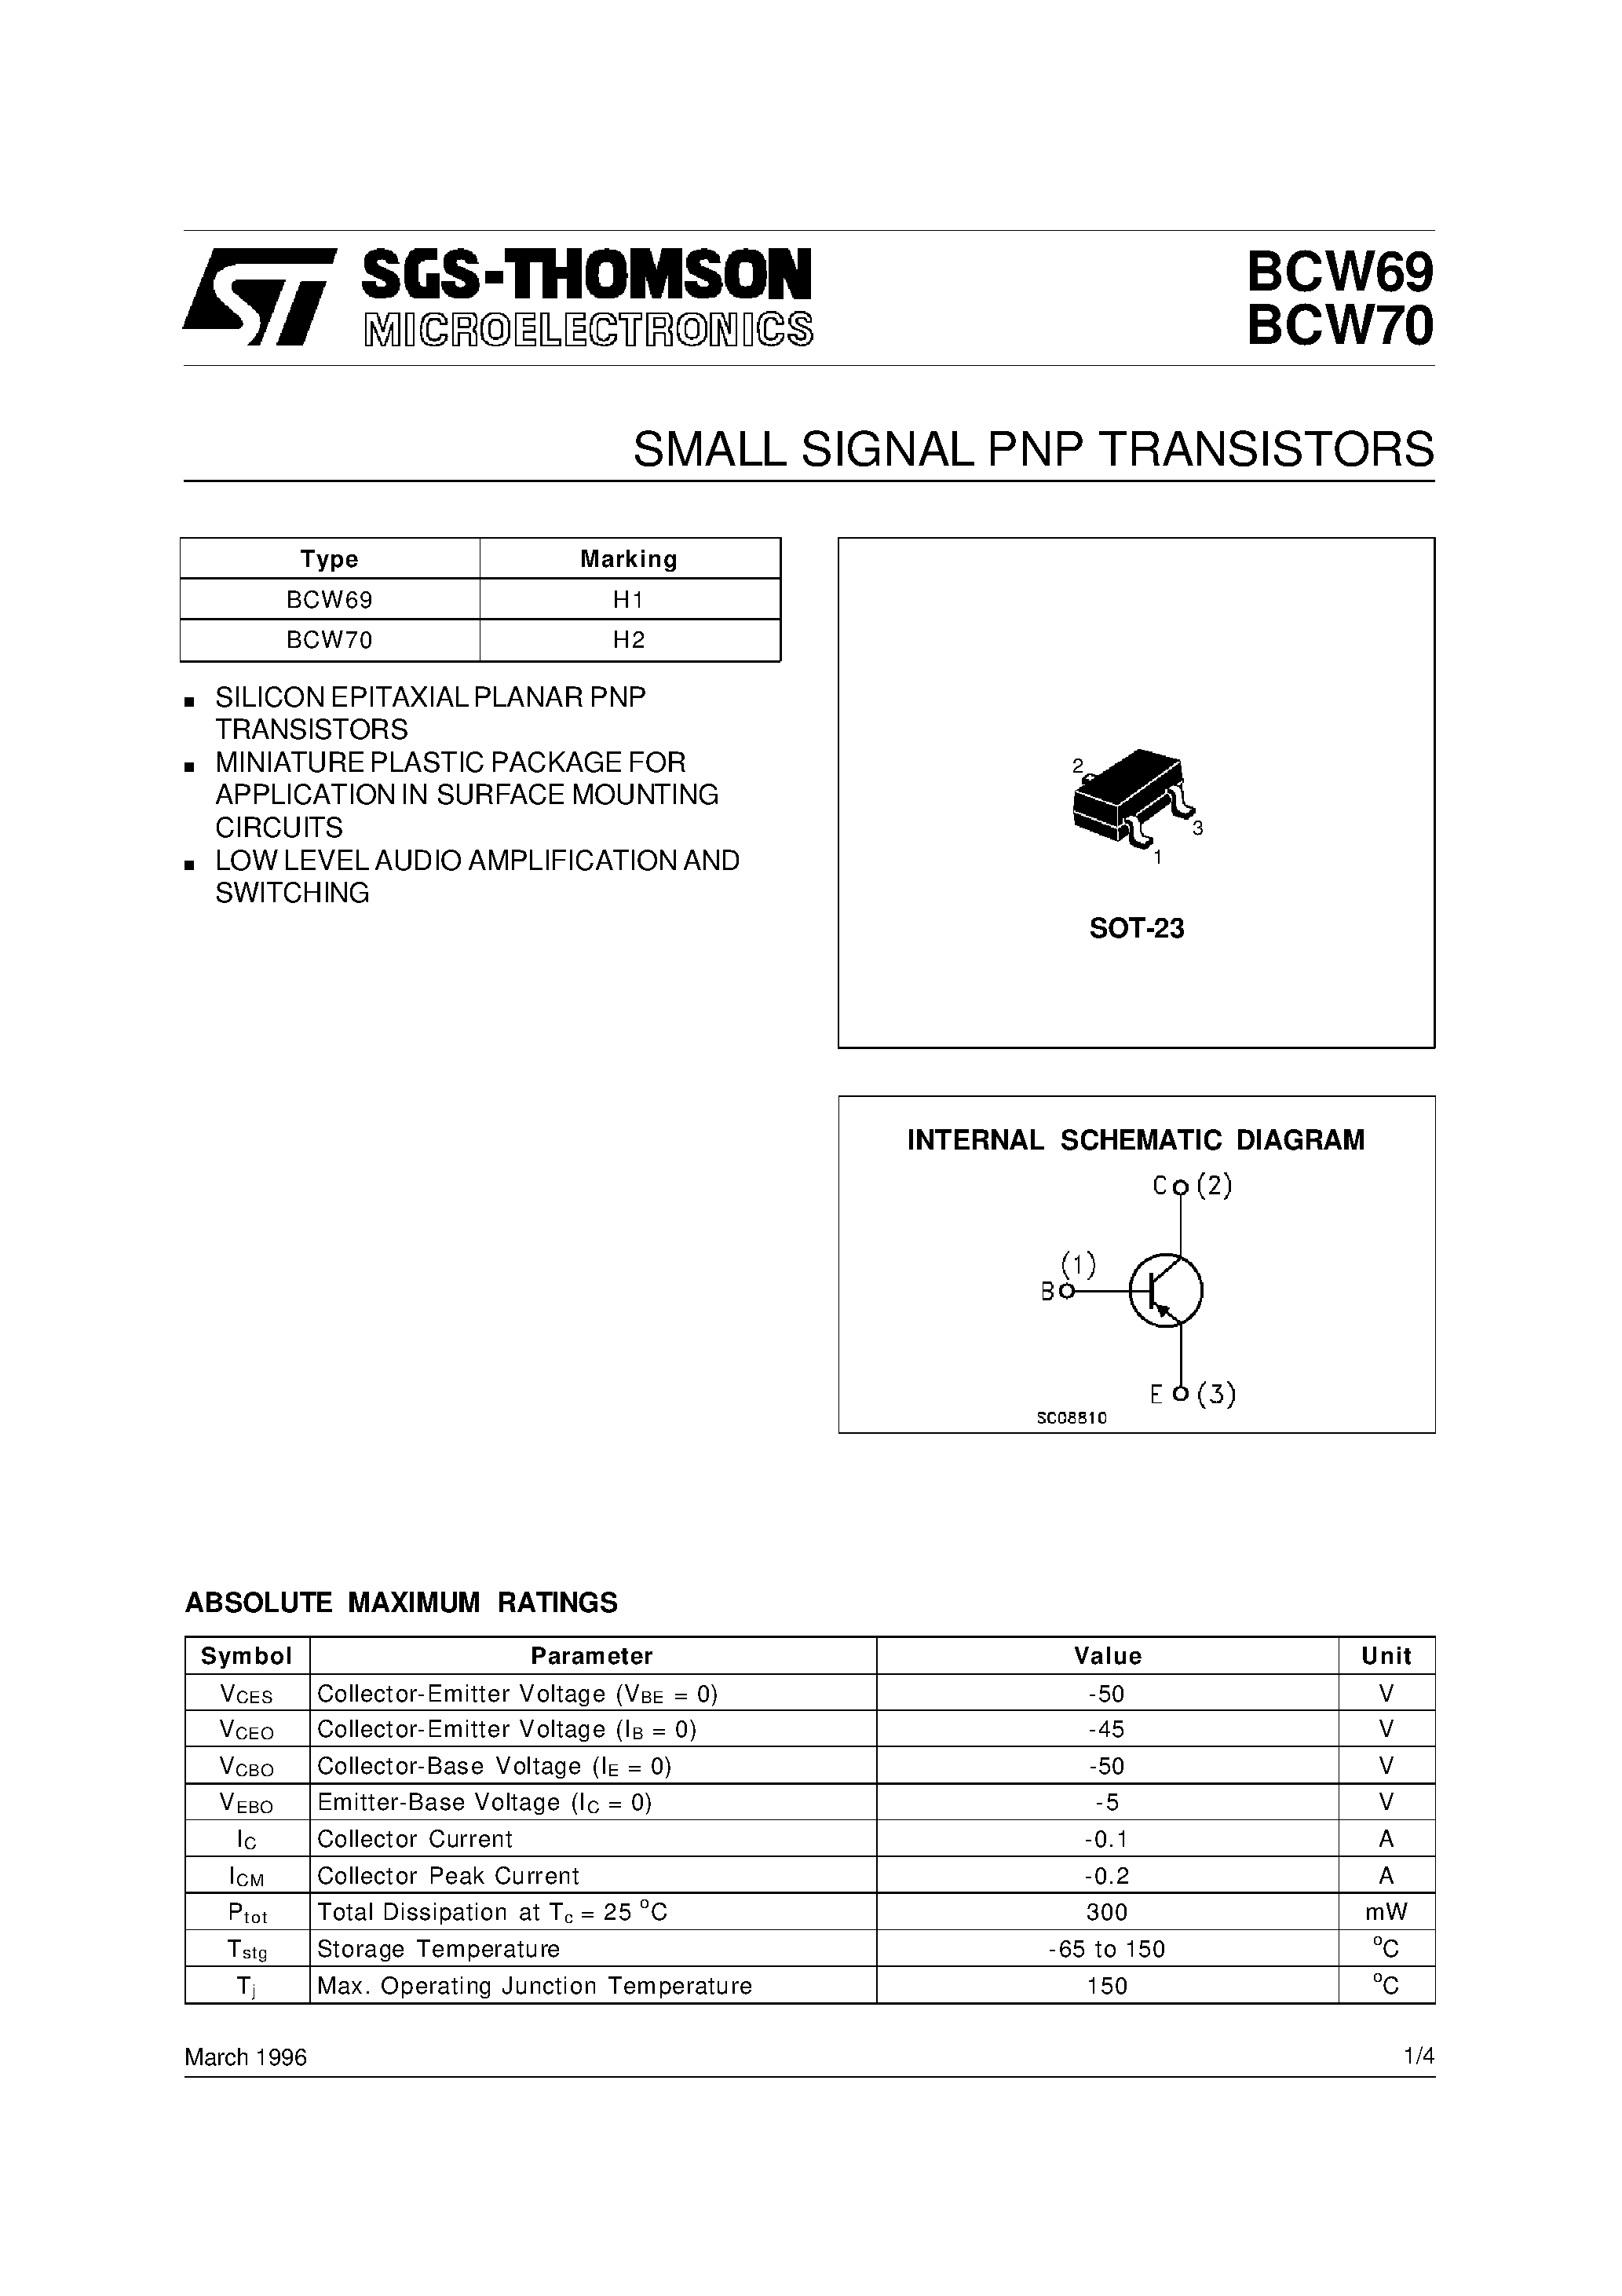 Datasheet BCW70 - SMALL SIGNAL PNP TRANSISTORS page 1